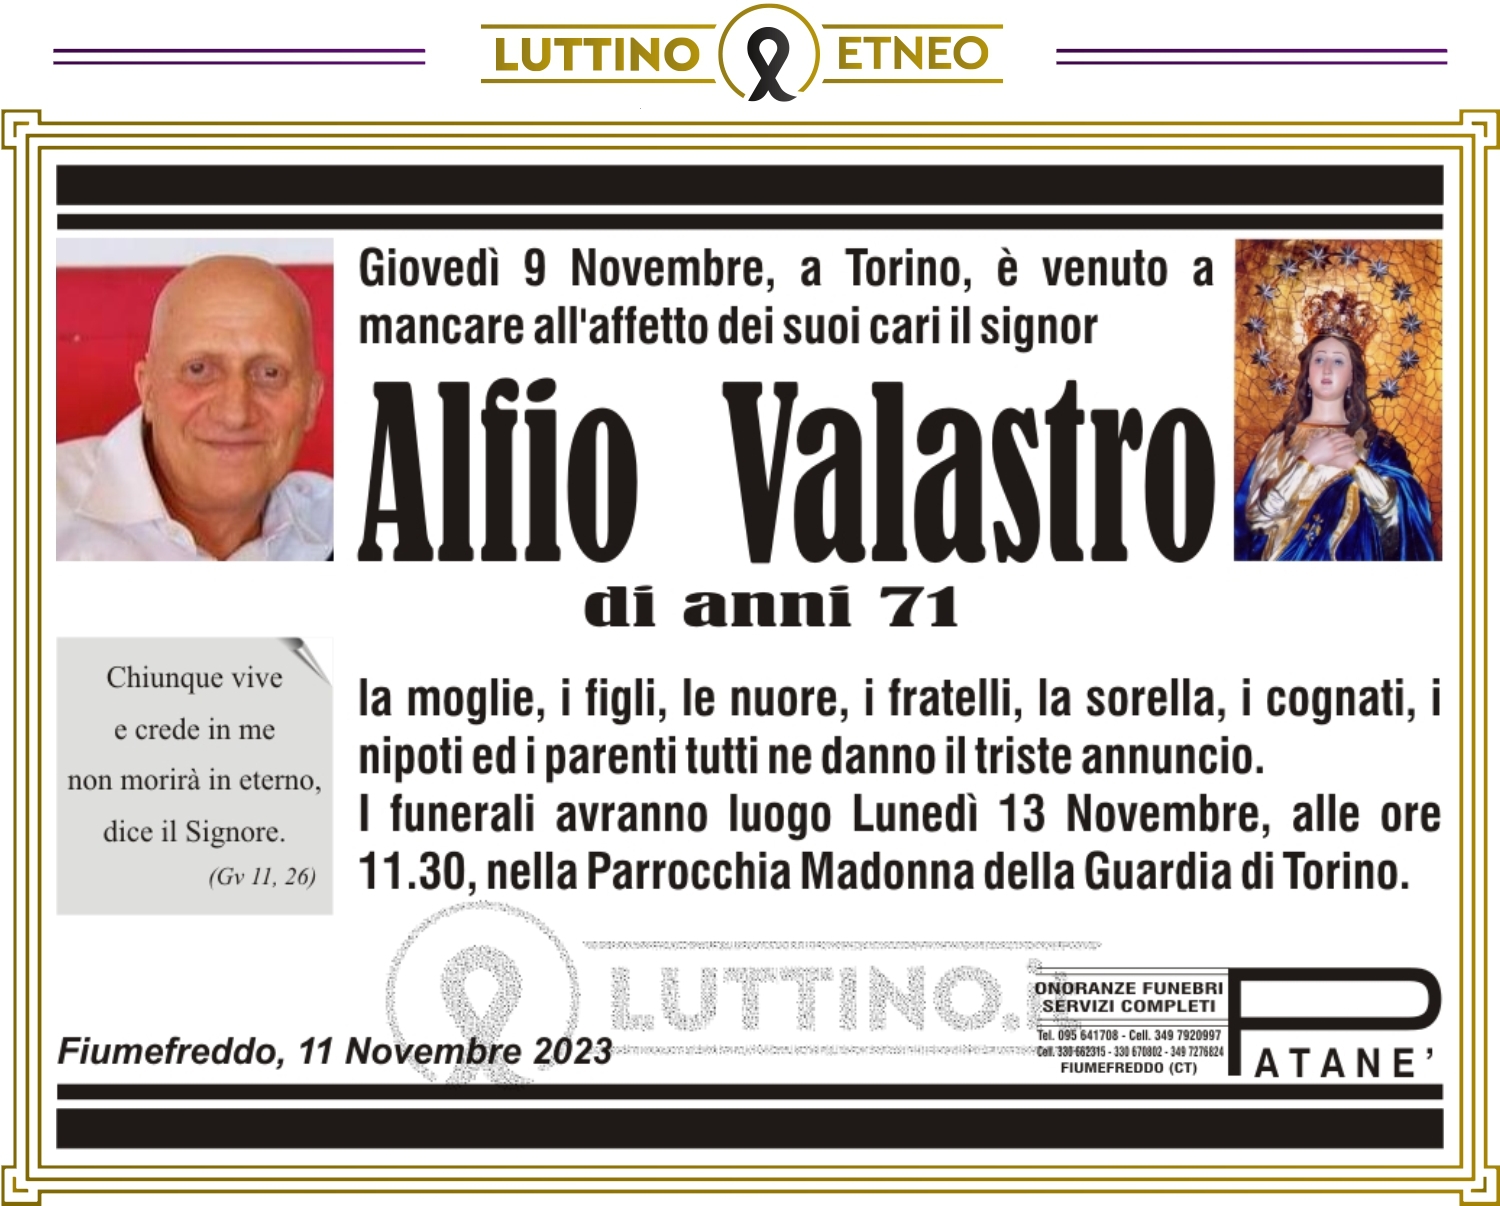 Alfio Valastro